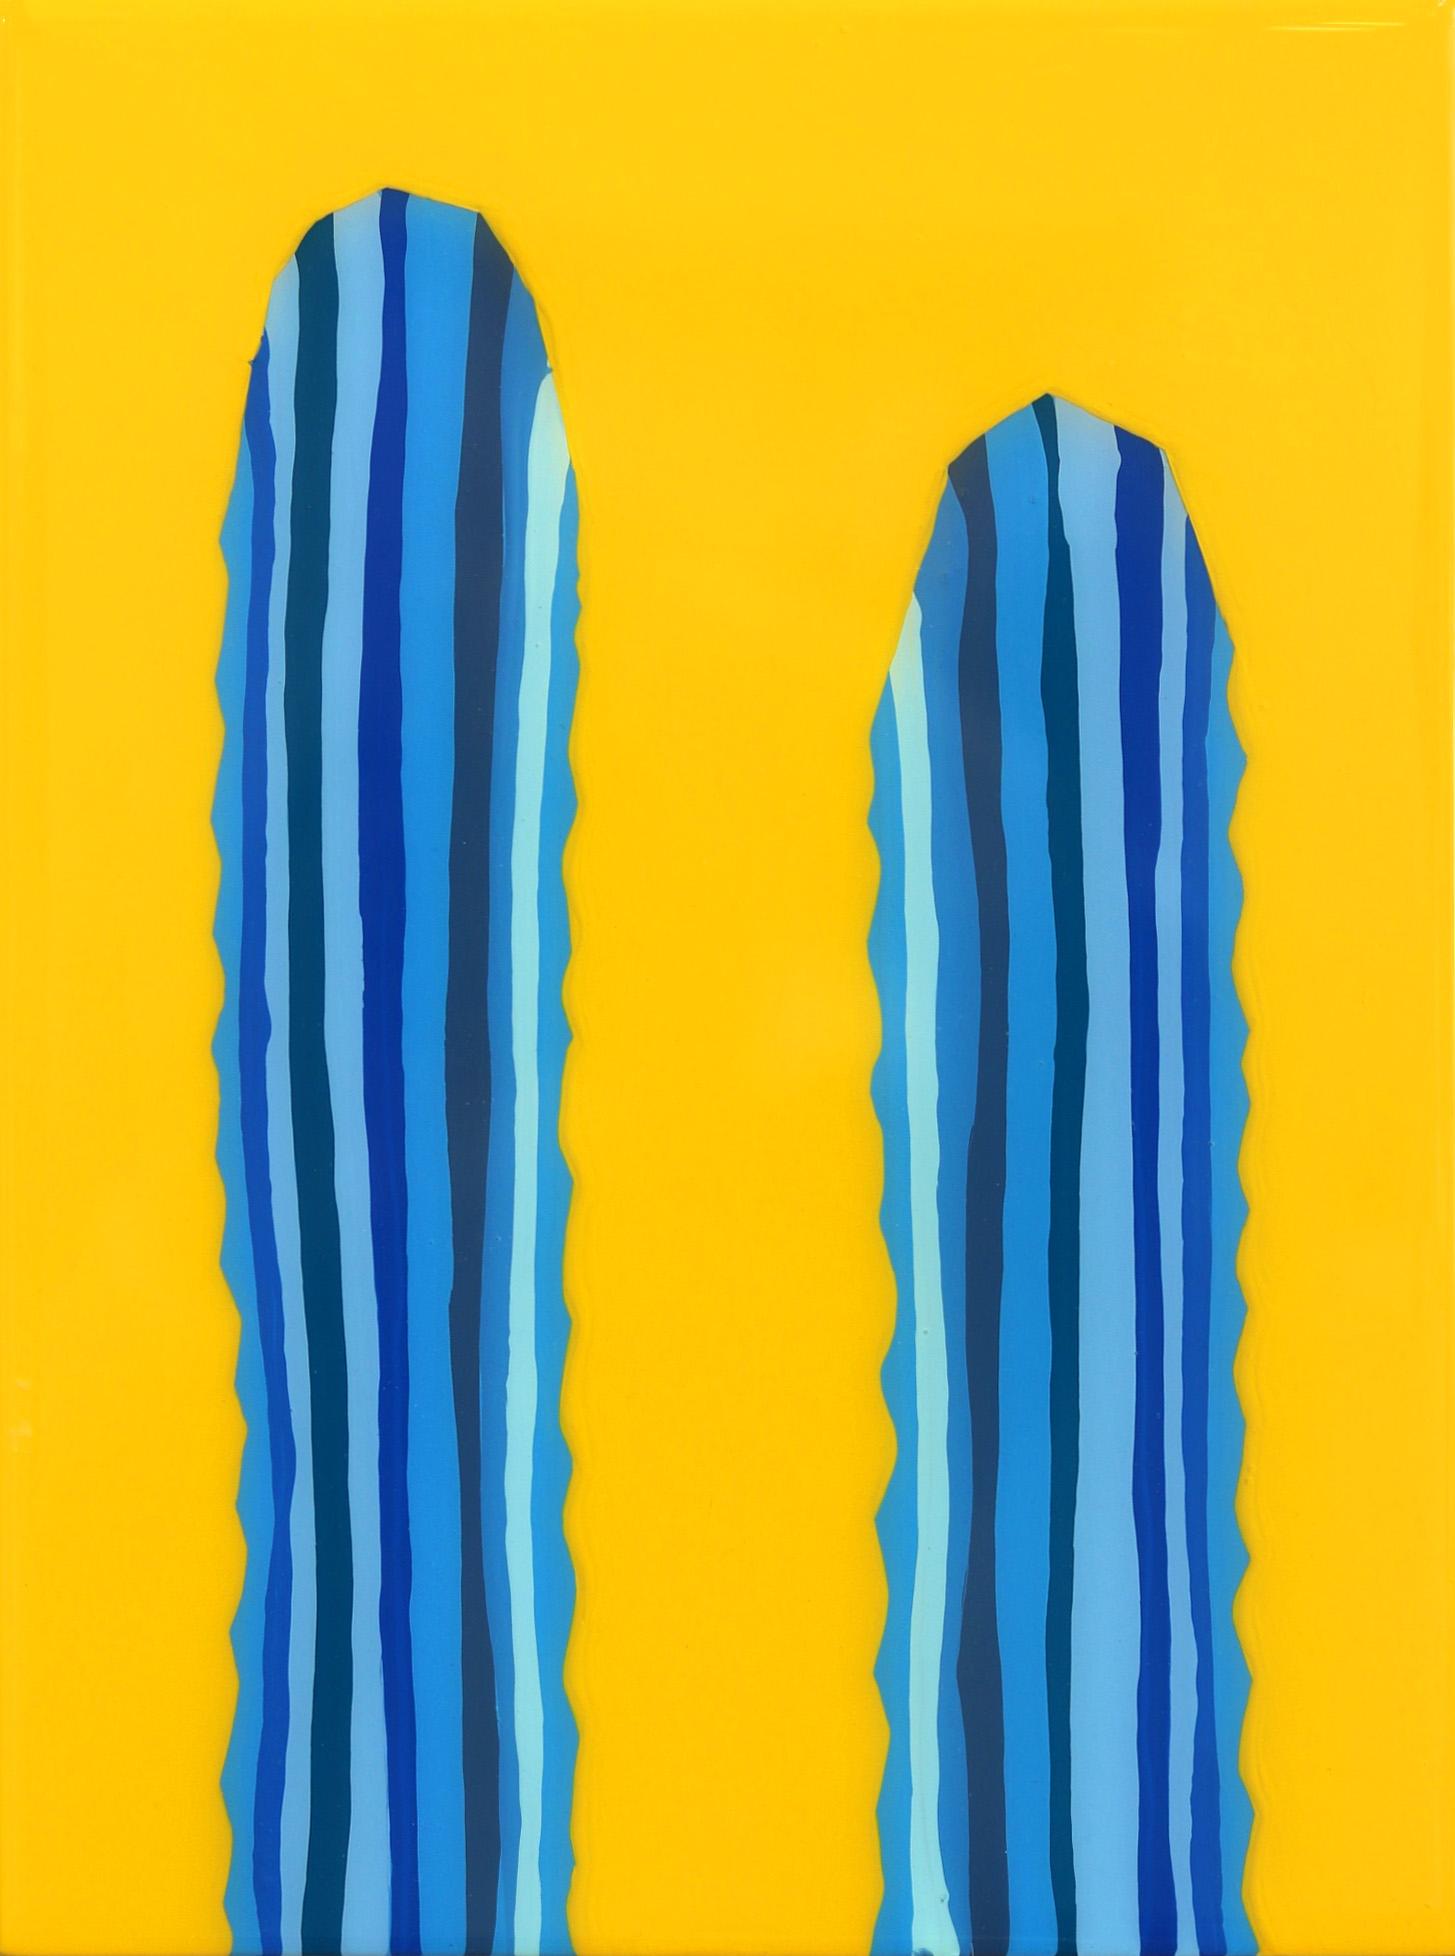 Abstract Painting Will Beger - Peinture de cactus pop art d'inspiration sud-ouest, jaune et bleu vif